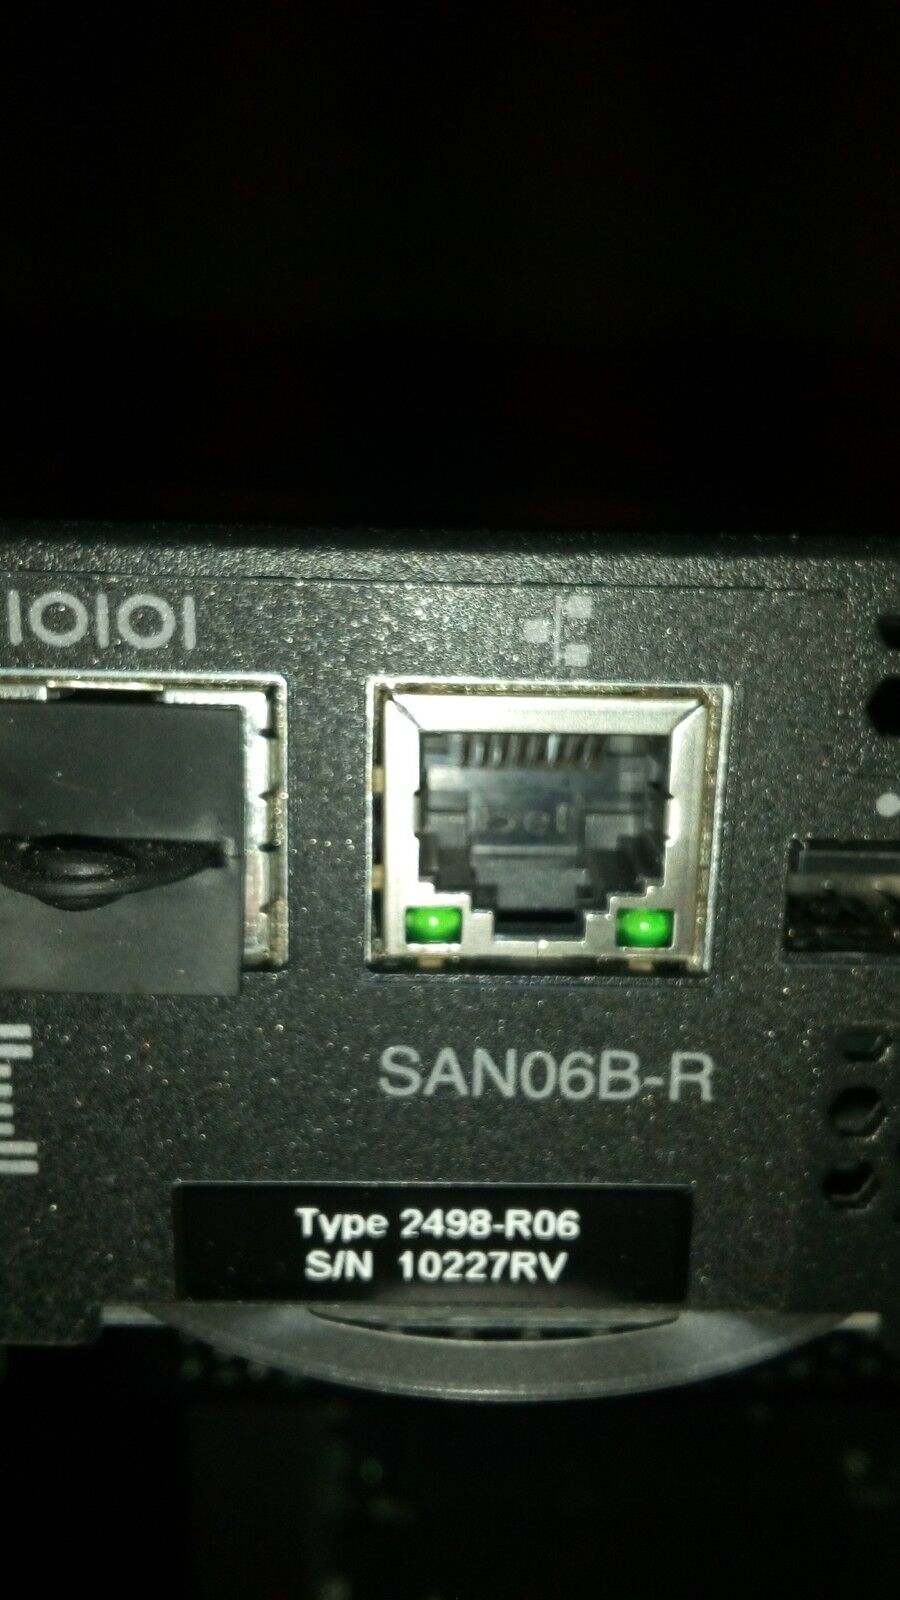 IBM 2498-R06 SAN06B-R 8Gbps 16x FC Ports SAN Switch Sliding Rails